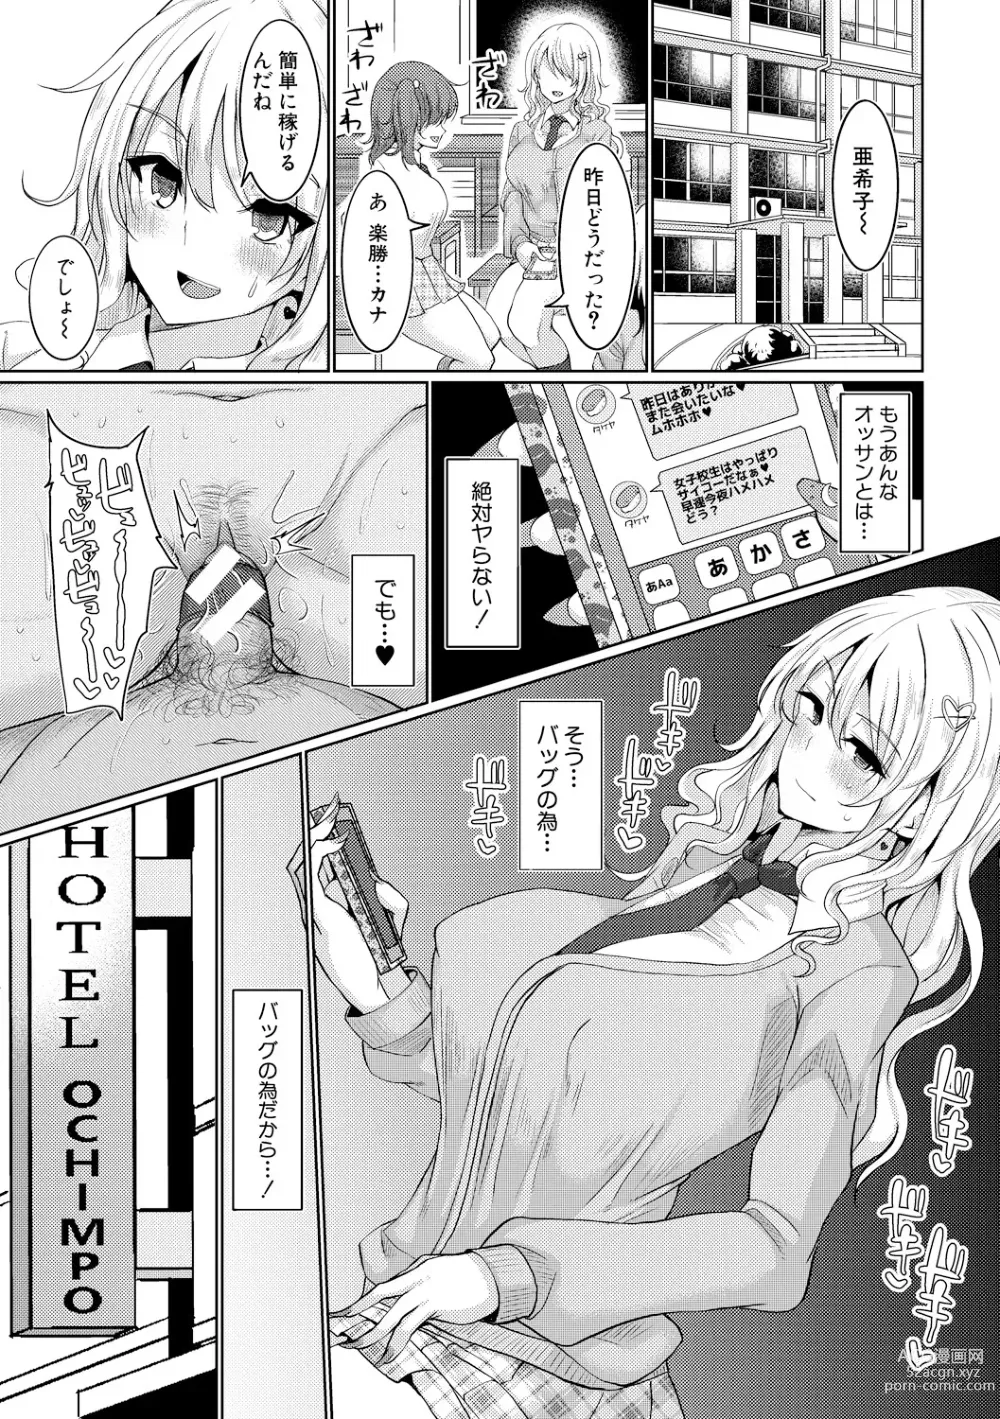 Page 14 of manga SUCK-SEX-STORIES